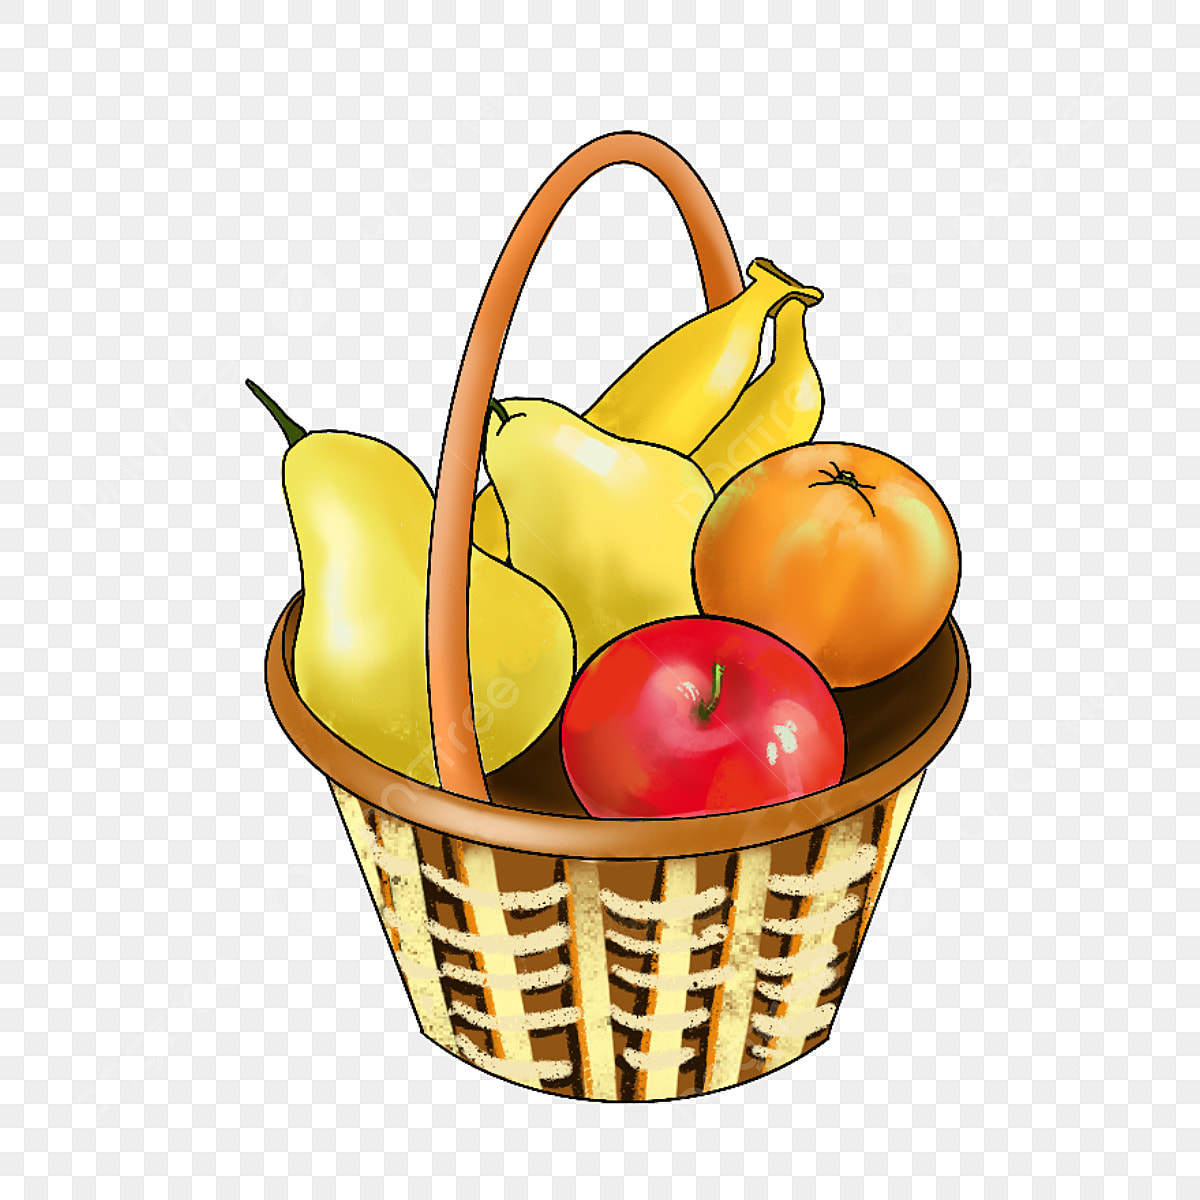 fruits basket cartoon images